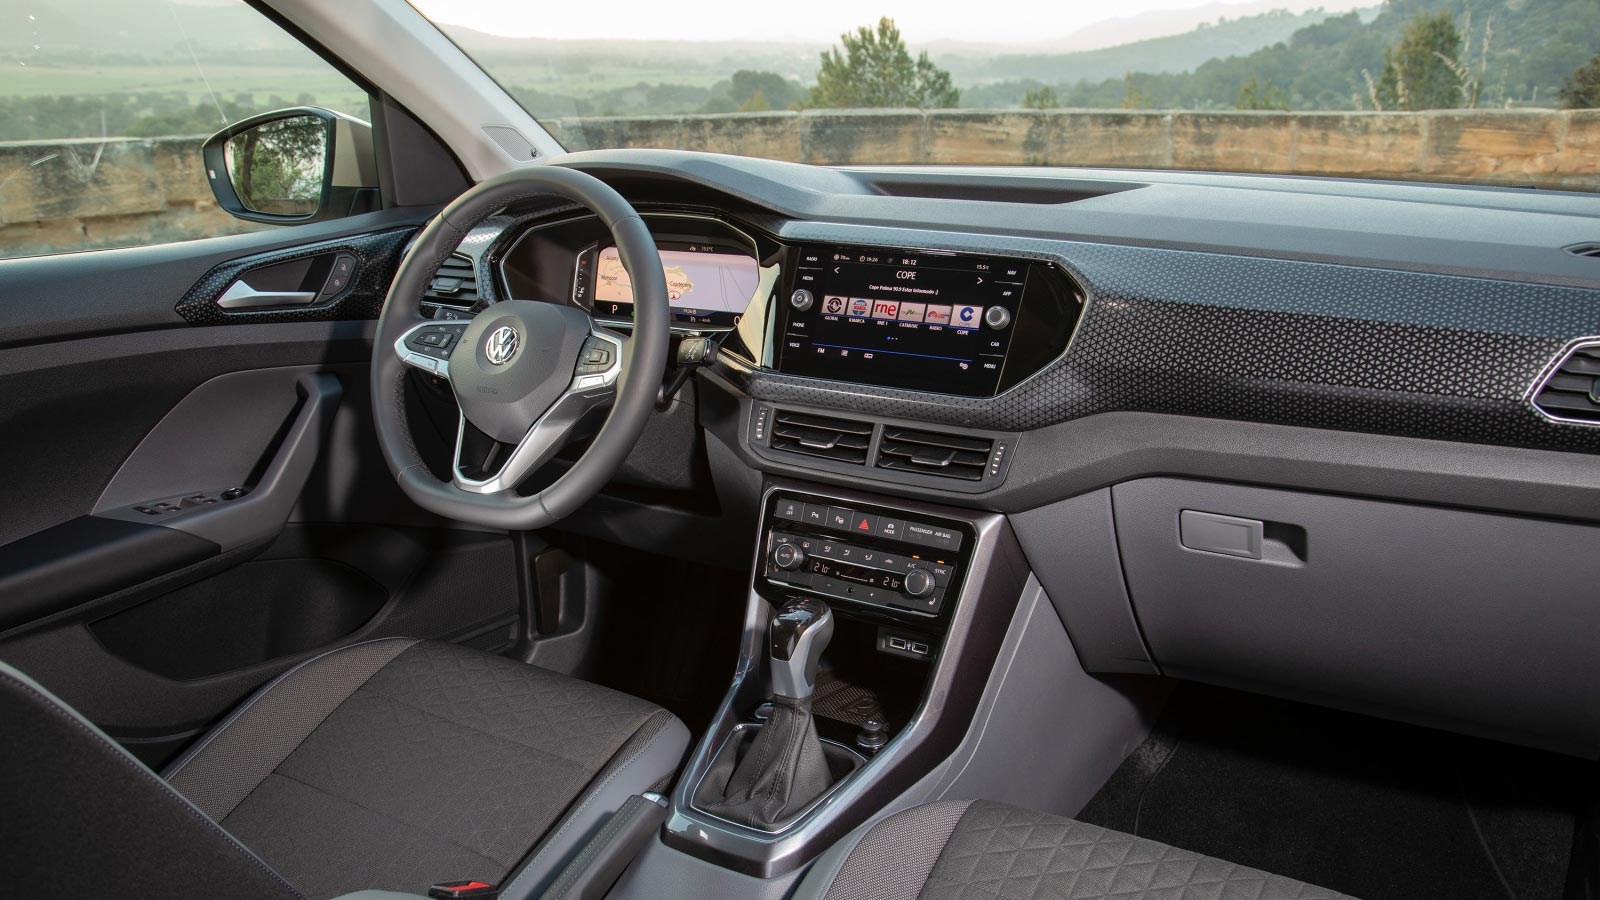 VW T-Cross review: TDI driven